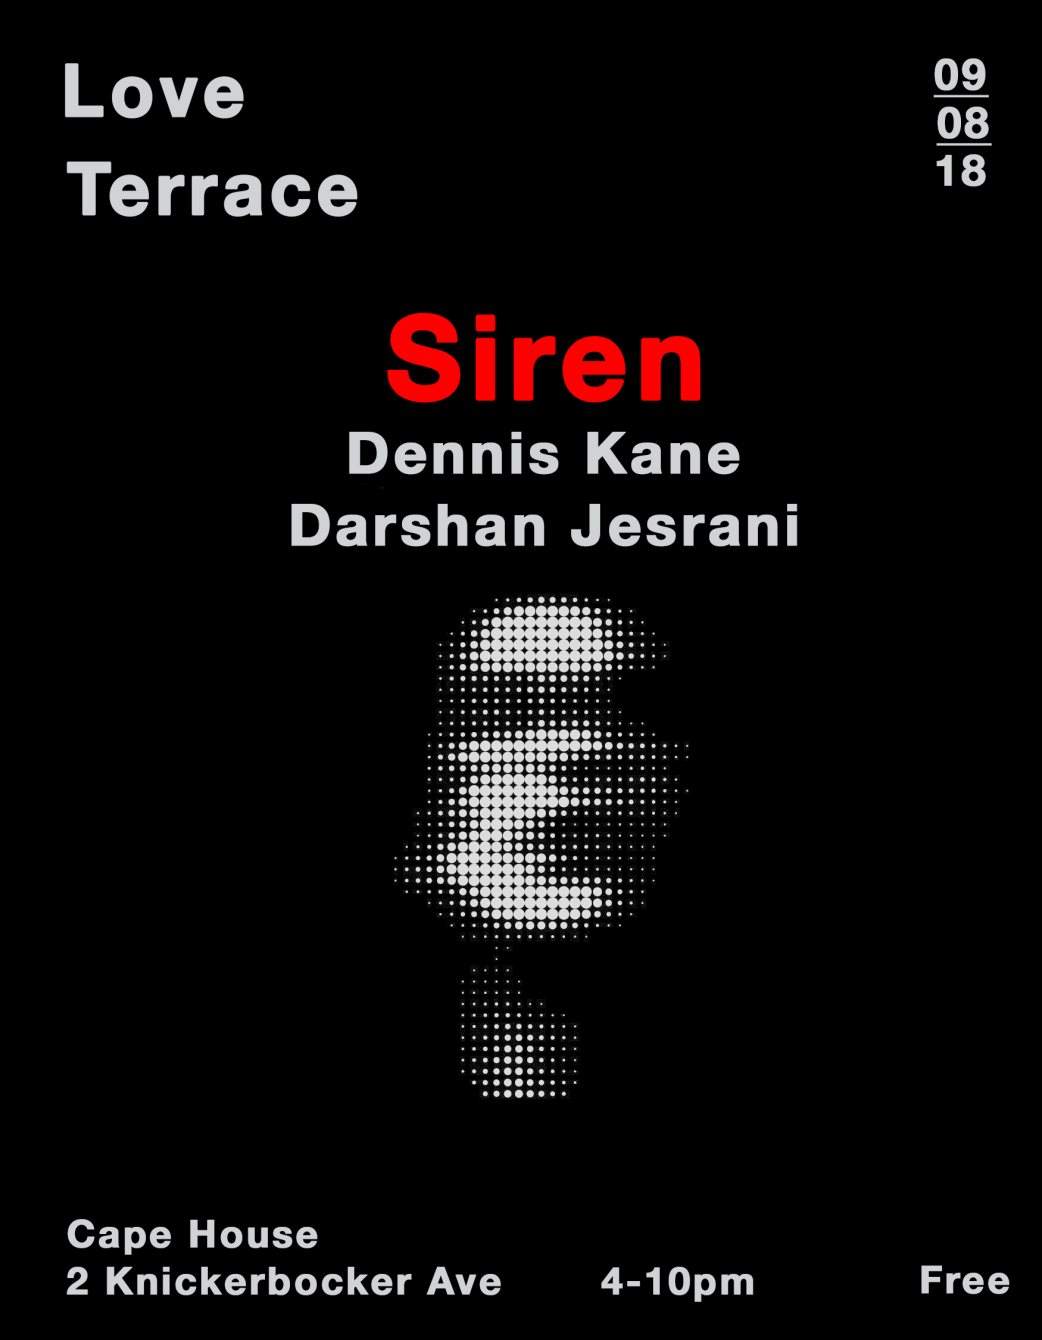 Love Terrace with Siren (Dennis Kane & Darshan Jesrani) - フライヤー表